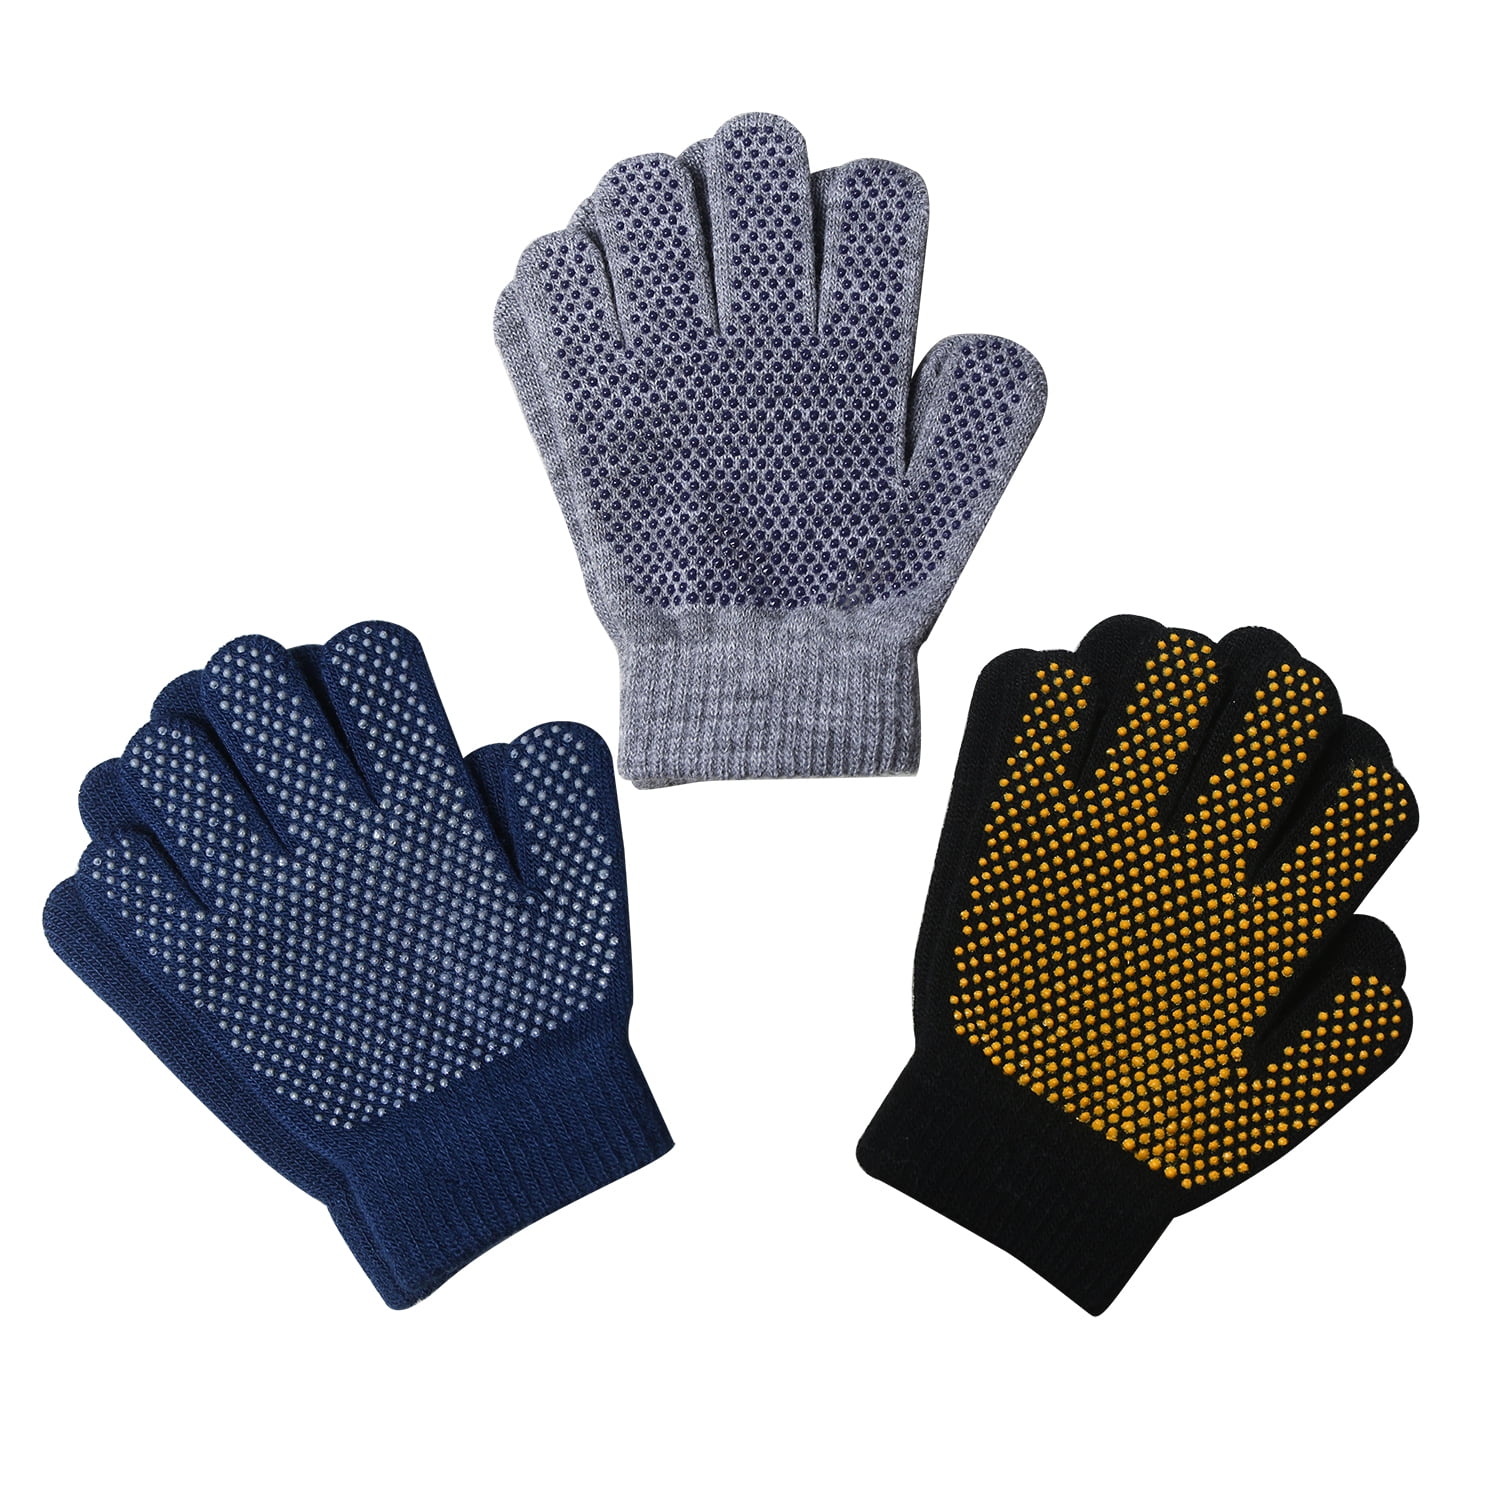 Childrens Kids Girls Boys Unisex Stretch Magic Gloves Black Warm Winter One Size 